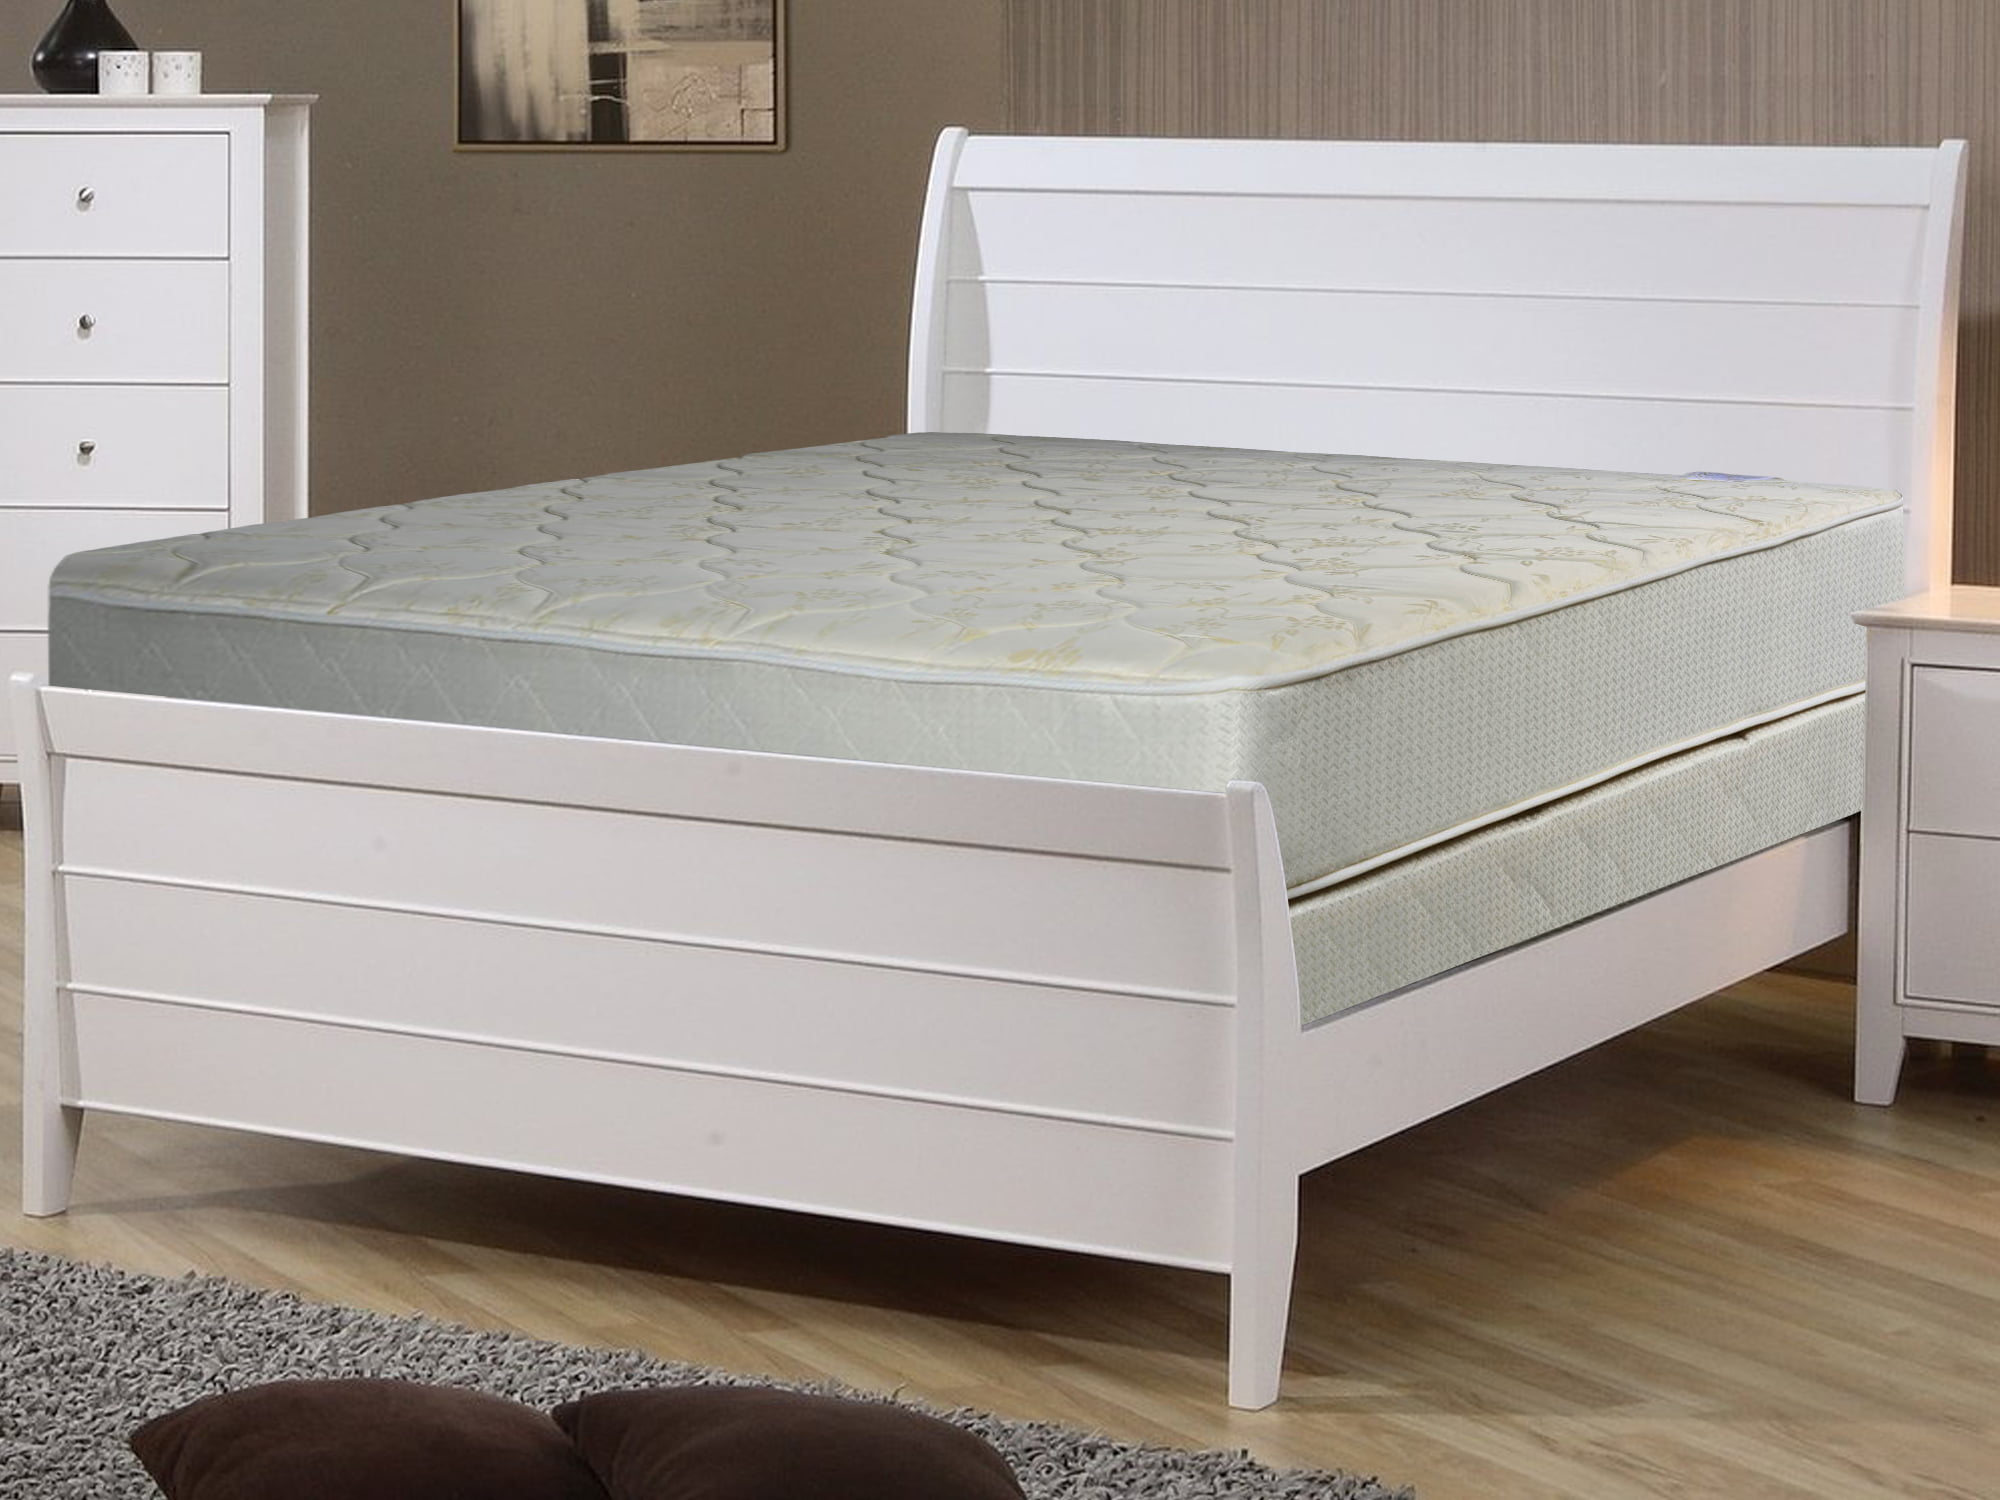 48 x 74 mattress size